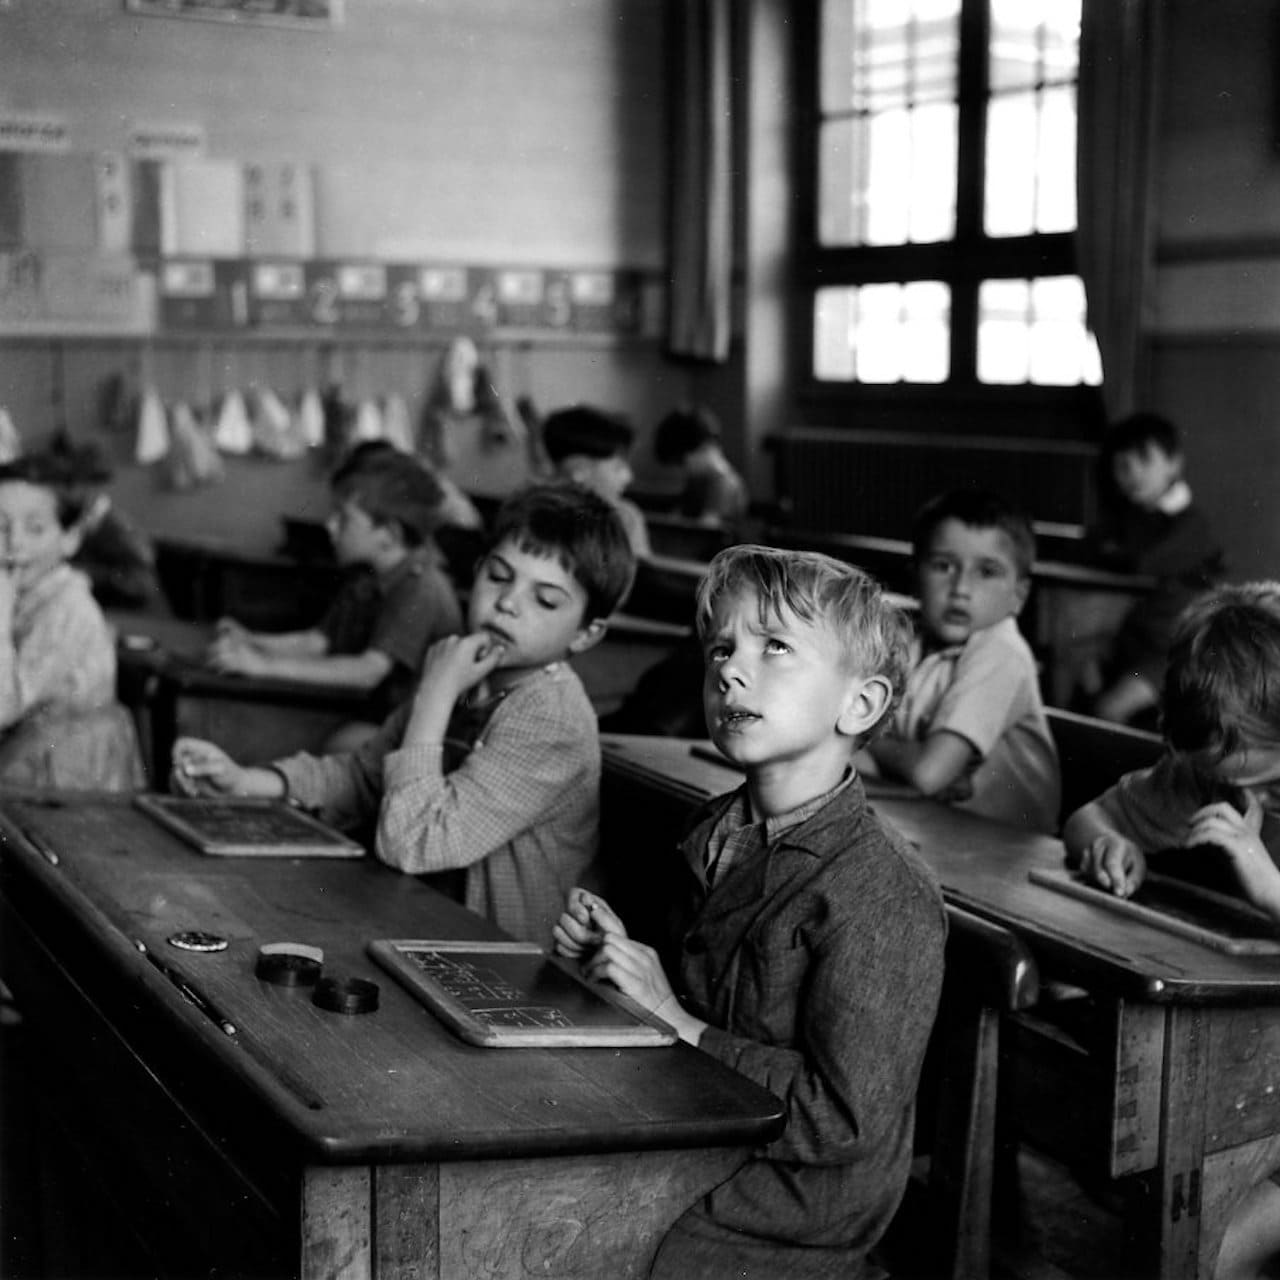 Robert Doisneau, L'information scolaire, Paris 1956 © Robert Doisneau